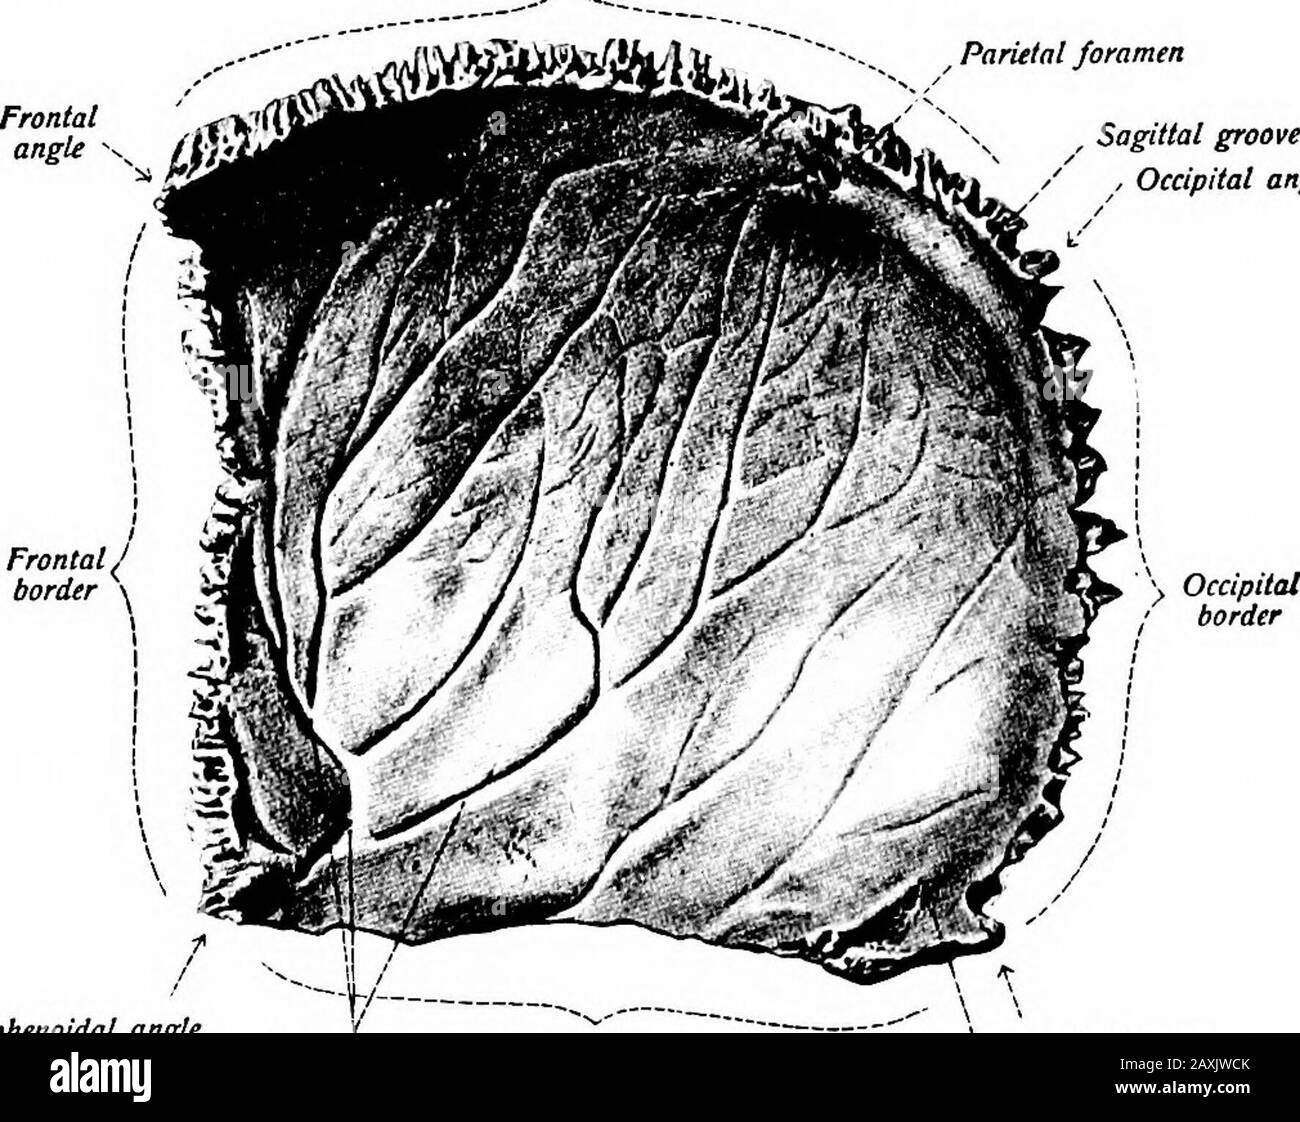 A Manual Of Anatomy Mastoid Angle Squamosal Border Sagittal Border Sphenoidalanglefig 22 Parietal Foramen Sagittal Groove Occipital Angle Frontal Border Sphenoidal Angle Sulci Arteriosl Squamosal Border Mastoid Angle Fig 23 Sigmoid